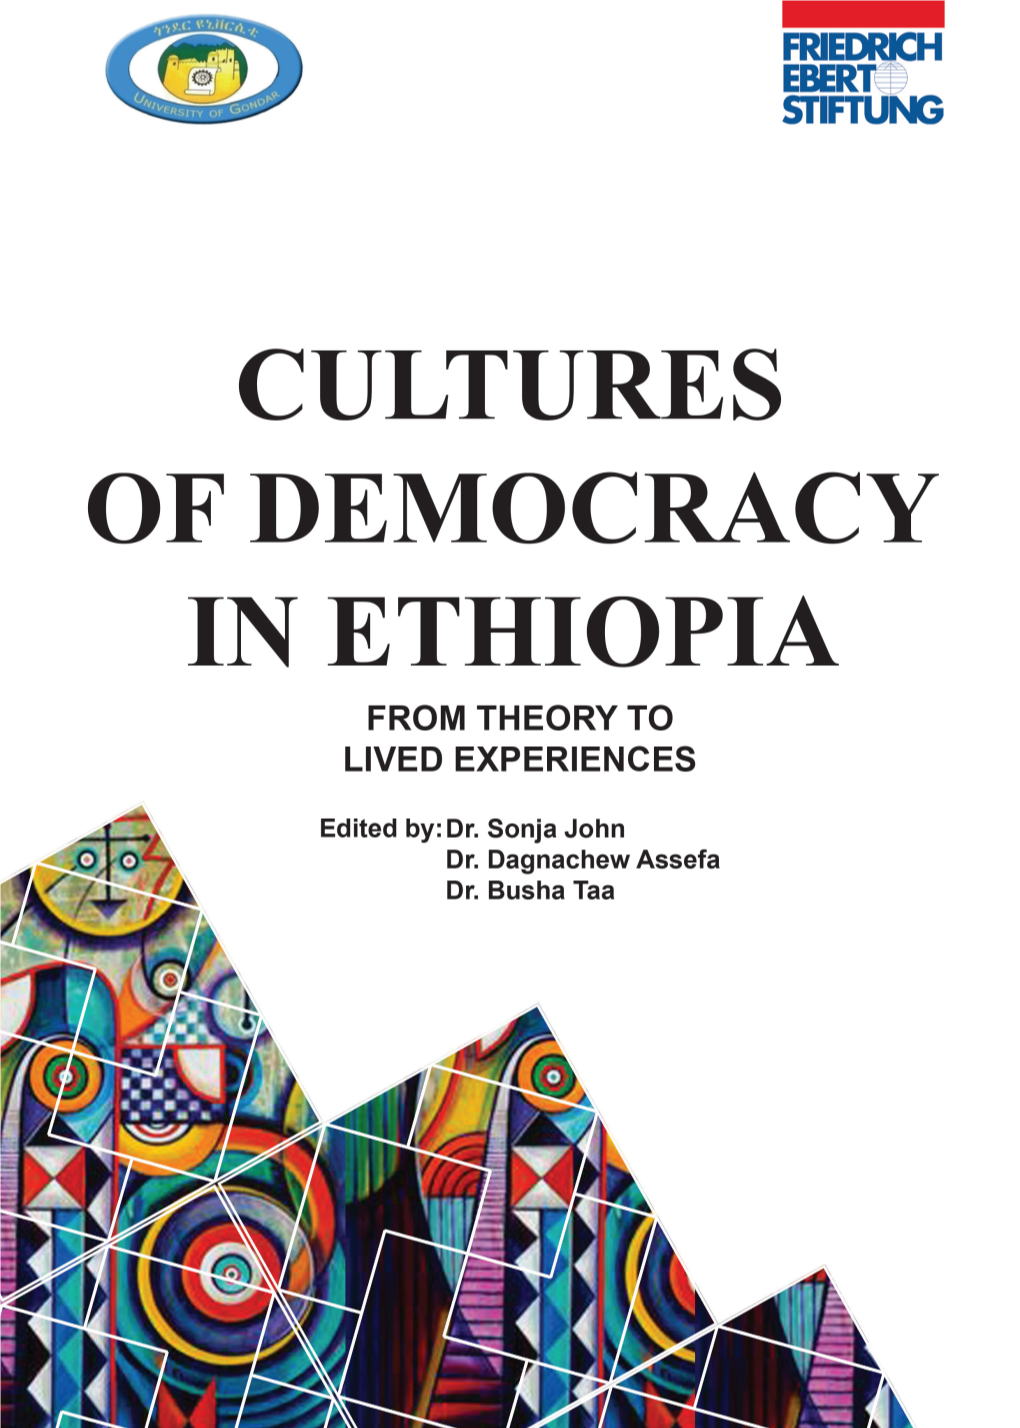 Cultures of Democracy in Ethiopia